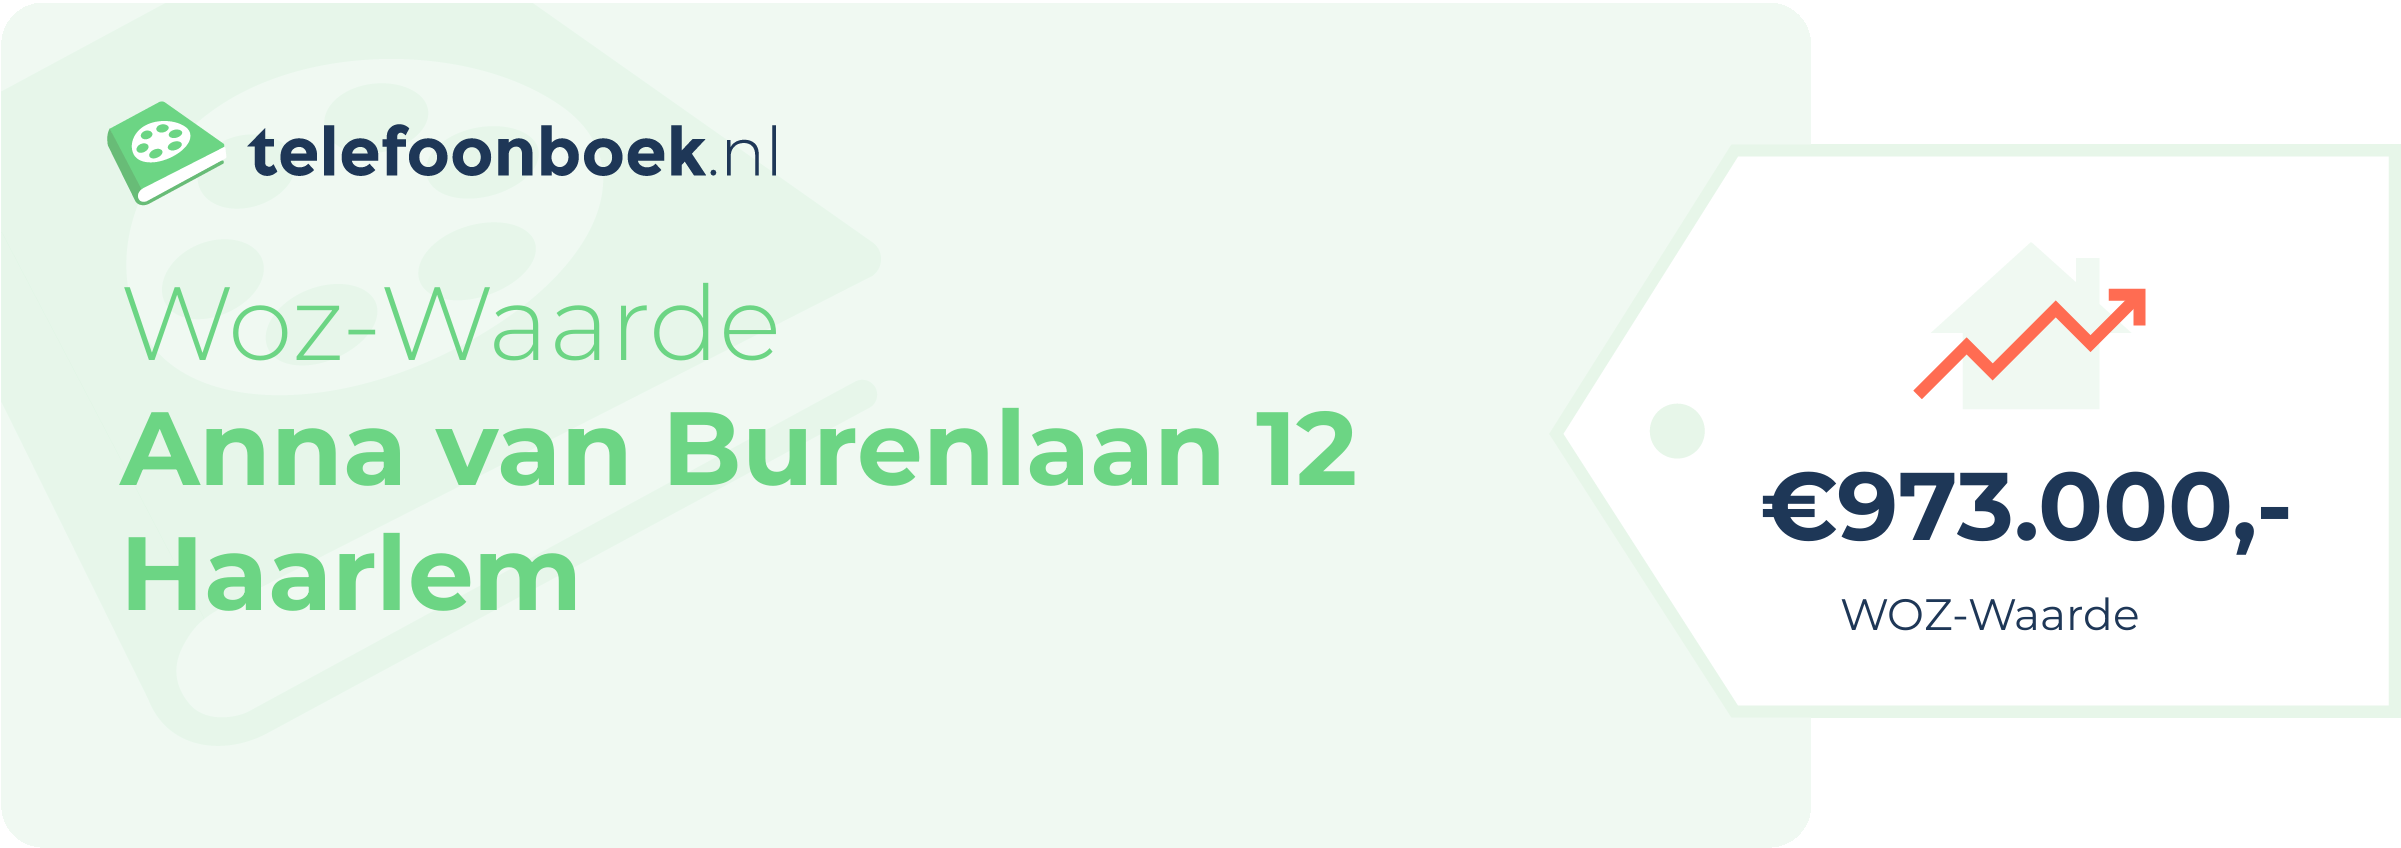 WOZ-waarde Anna Van Burenlaan 12 Haarlem